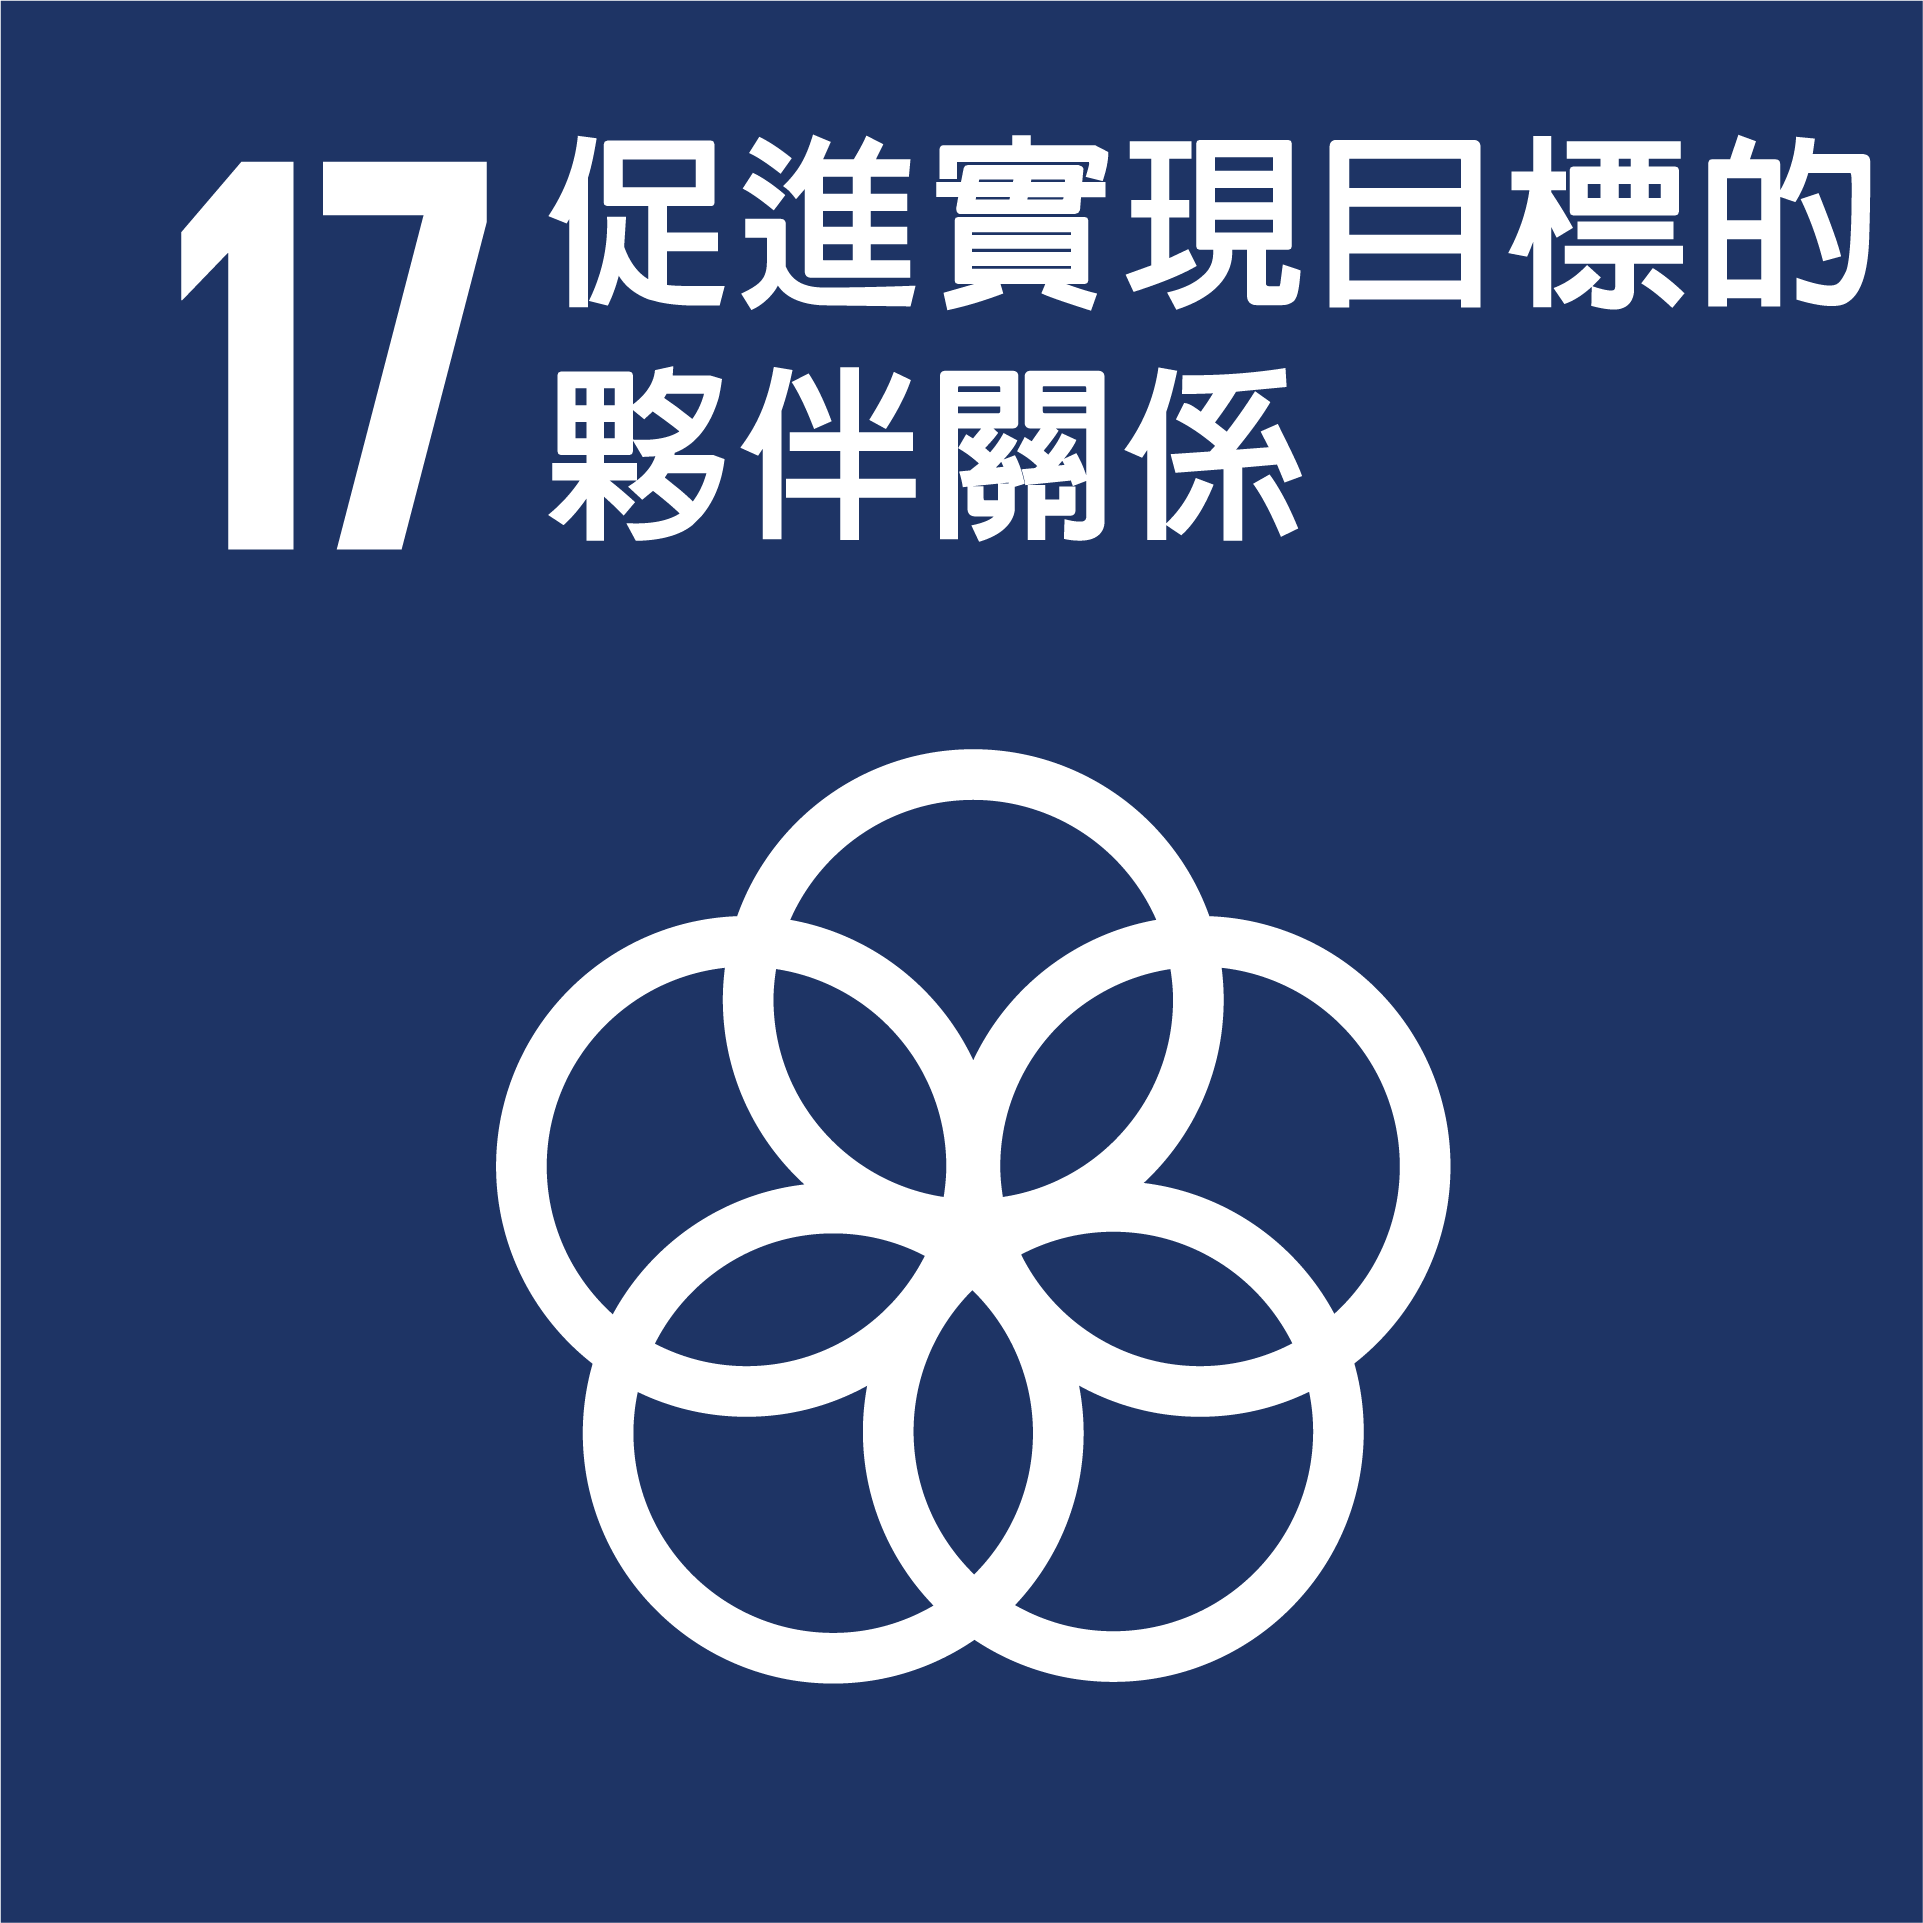 SDG vertical logo icons Chi 17